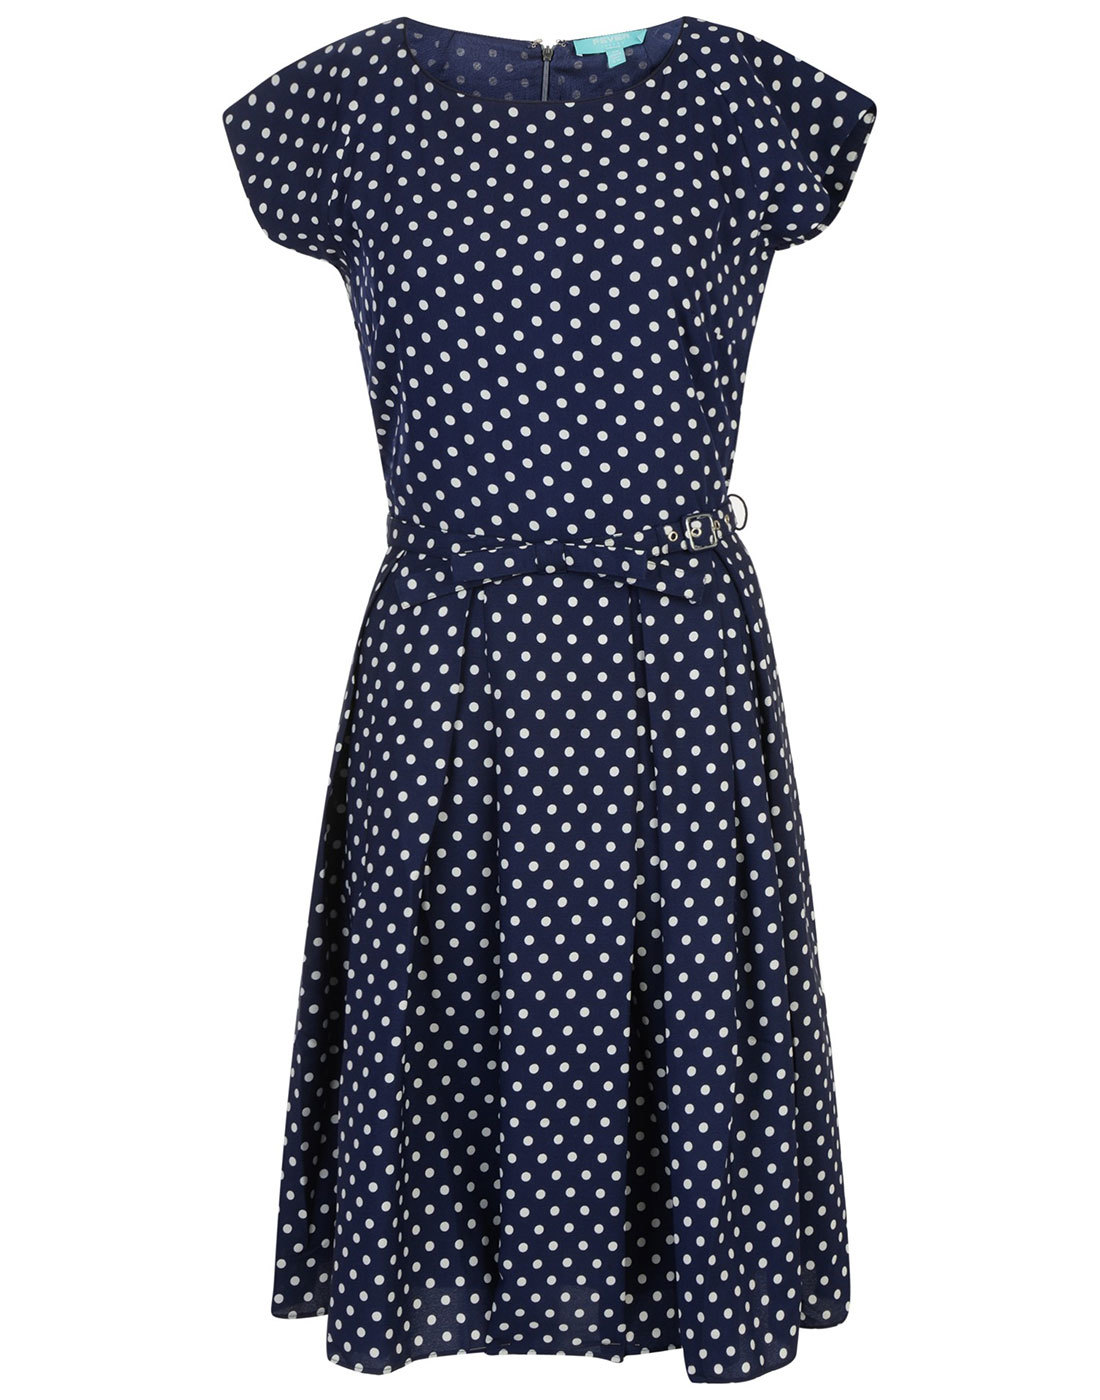 FEVER Mary Retro 1950s Short Sleeve Vintage Polka Dot Prom Dress